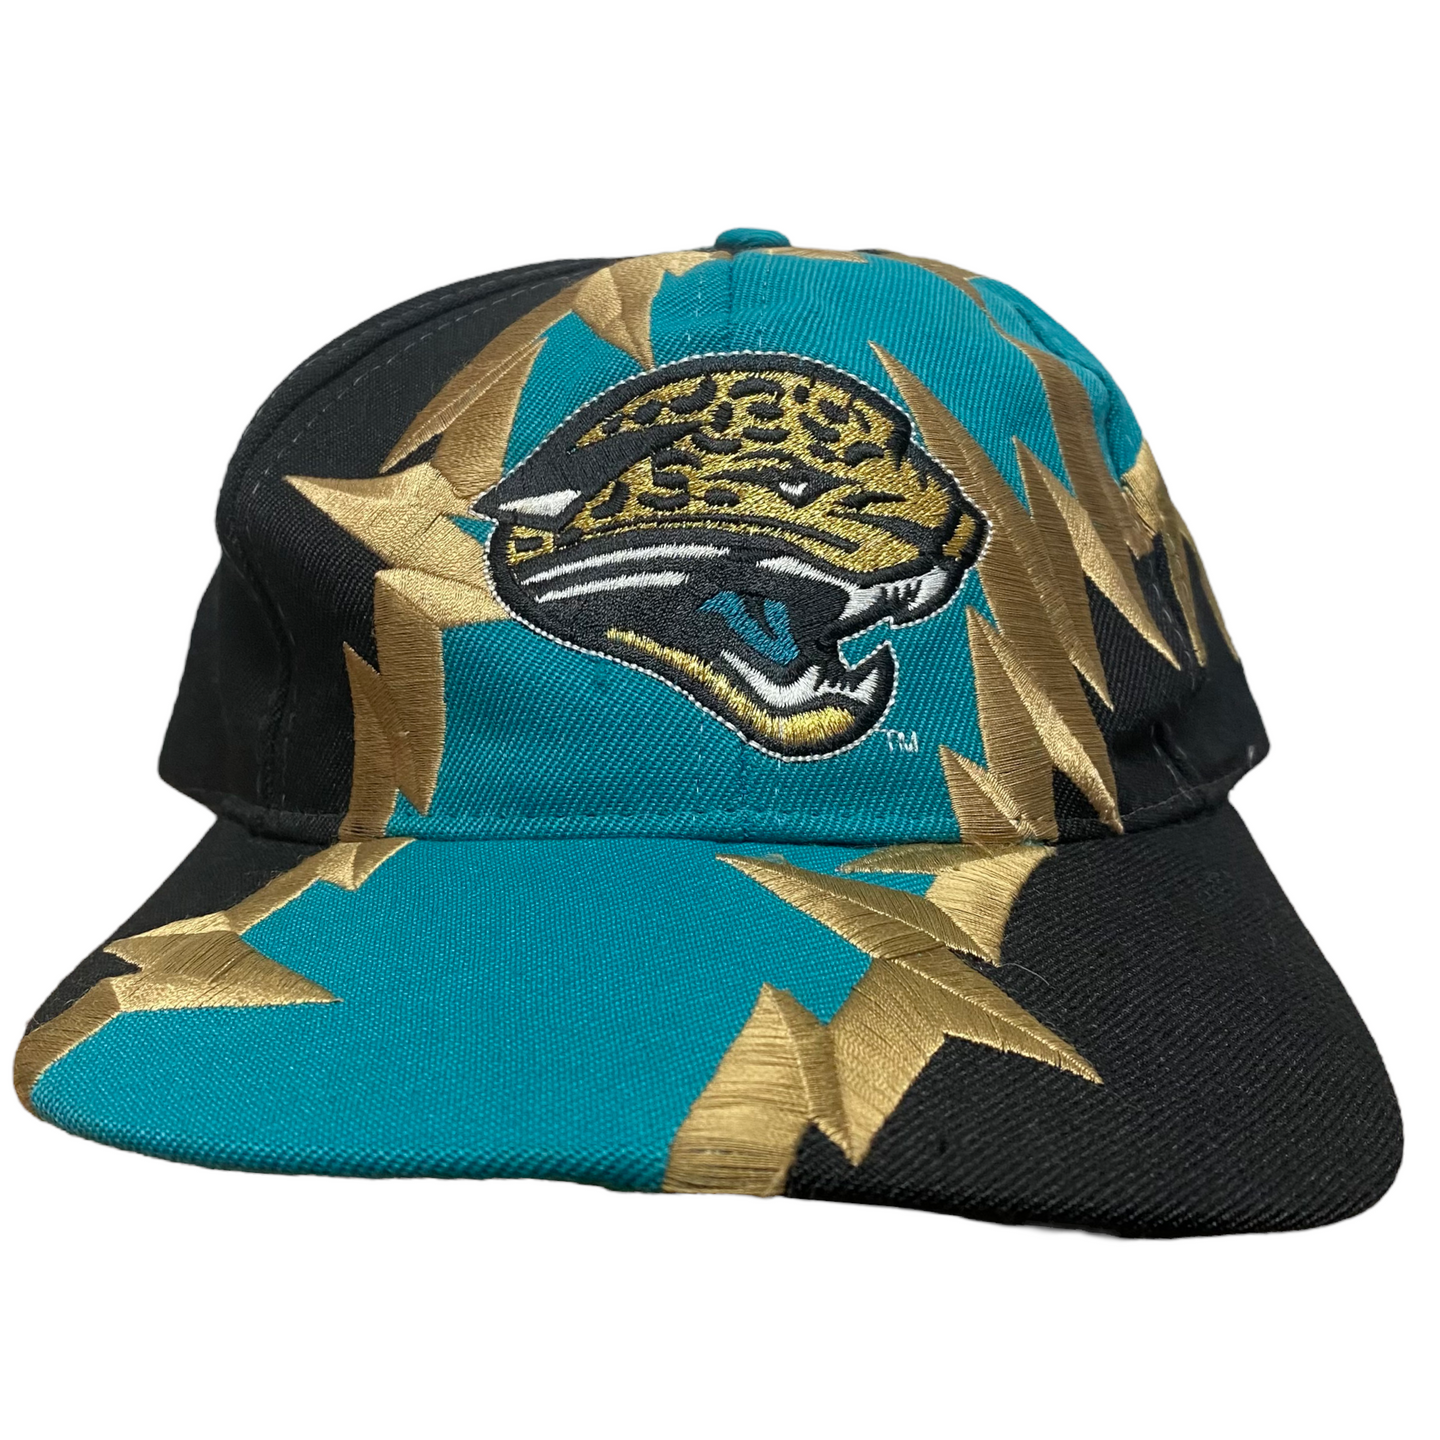 Vintage Jacksonville Jaguars snapback hat